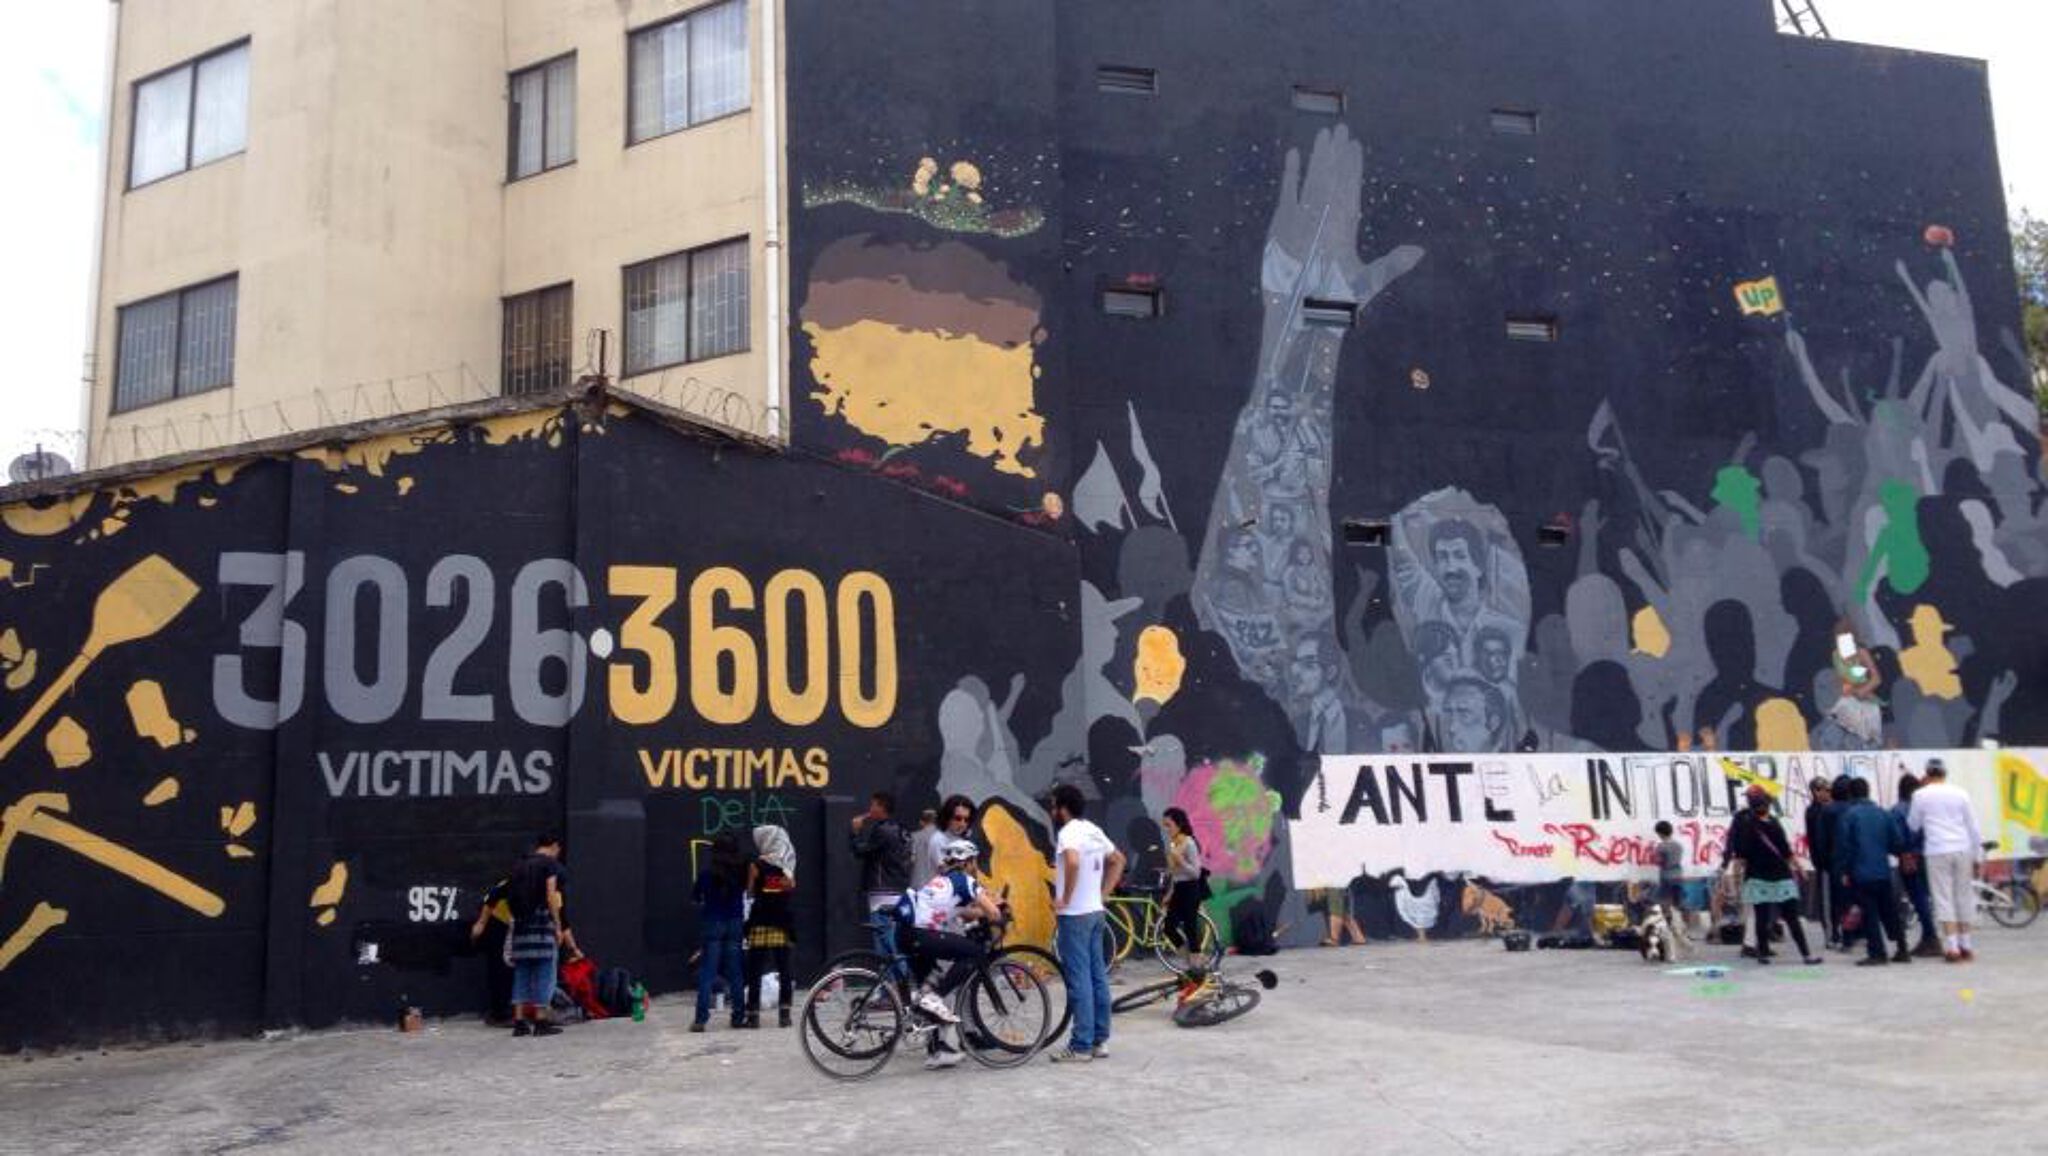 Unknown - Bogota&mdash;Victims - Victimas